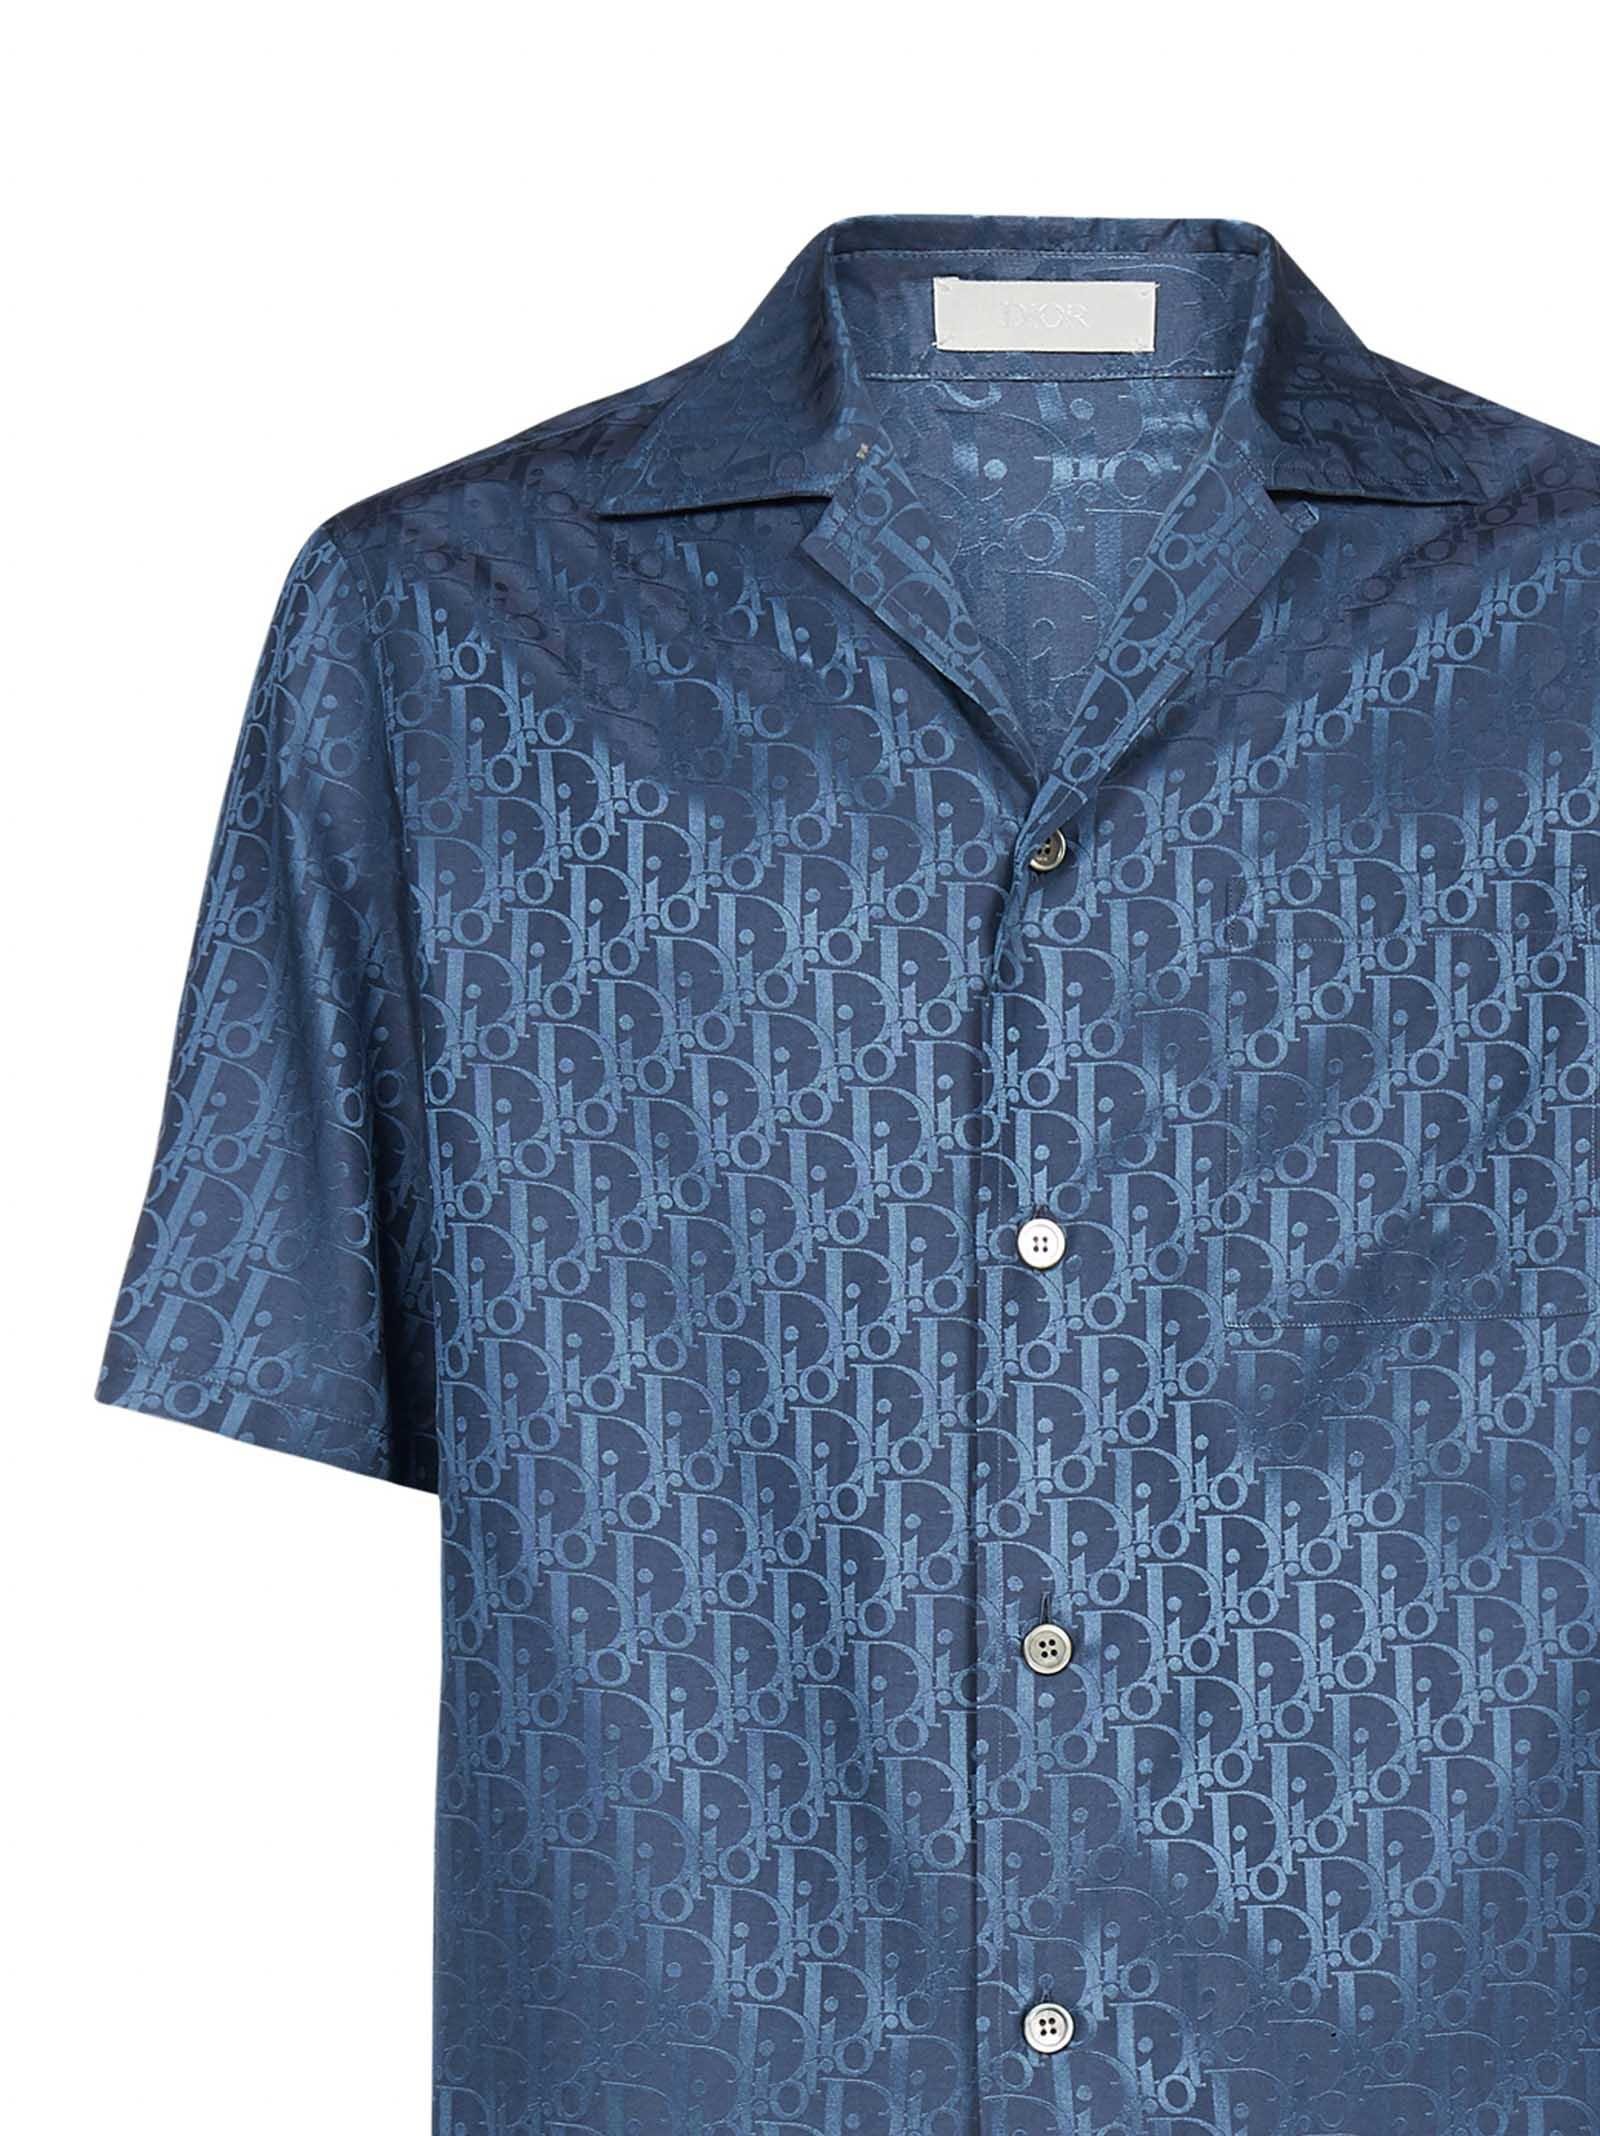 Dior Silk Oblique Short Sleeve Shirt in Blue for Men - Lyst